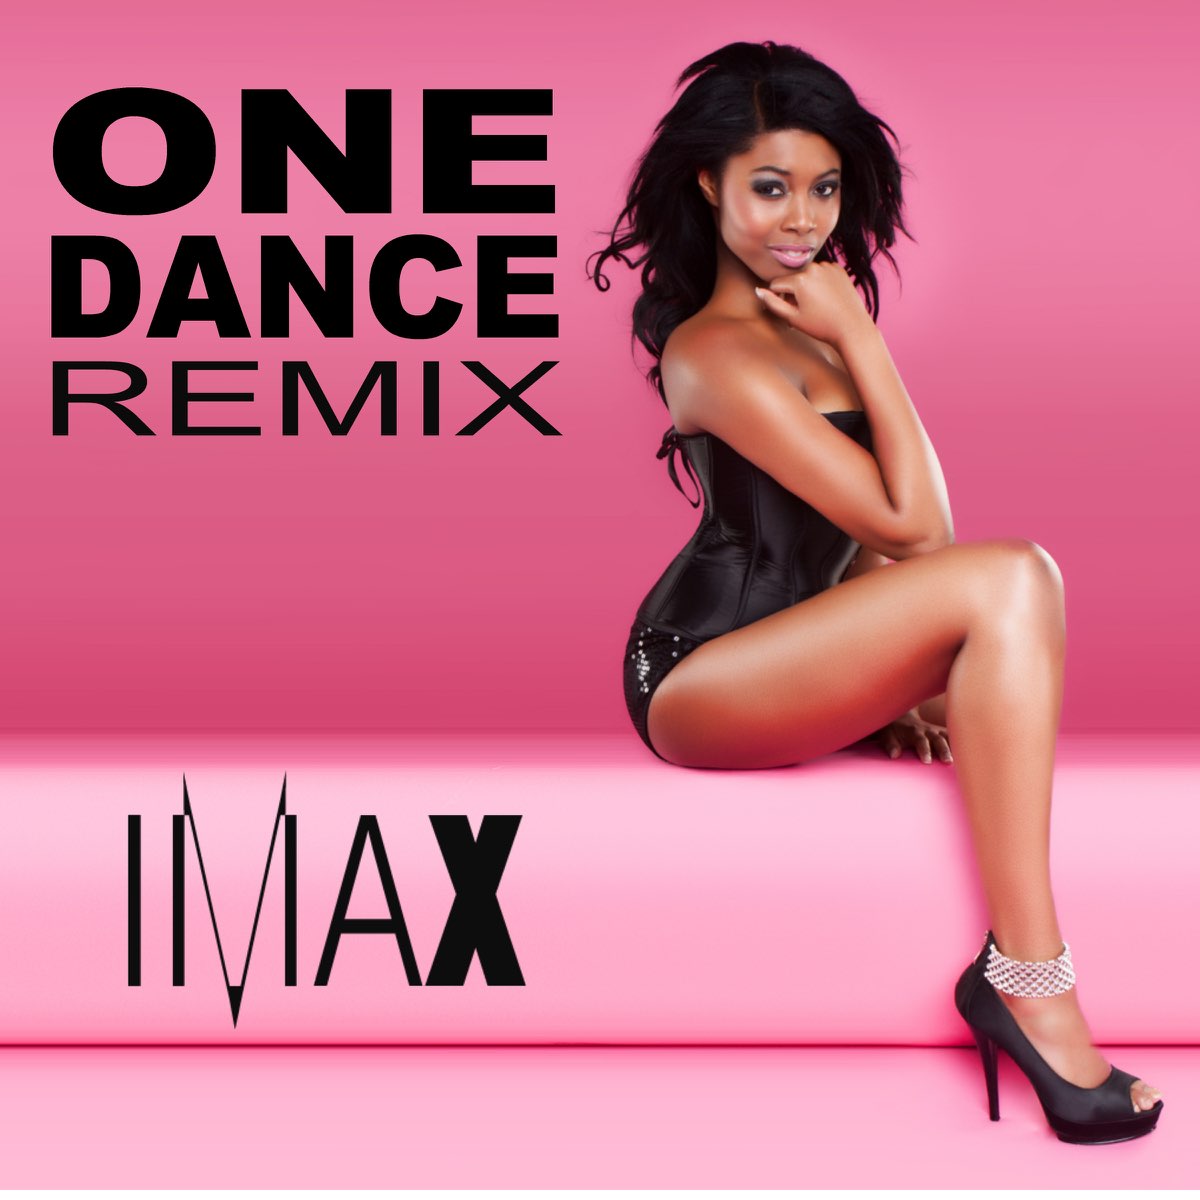 Dancing remix mp3. Rem Dance. Dance Remixes. Оне дэнс. One Dance Remix.